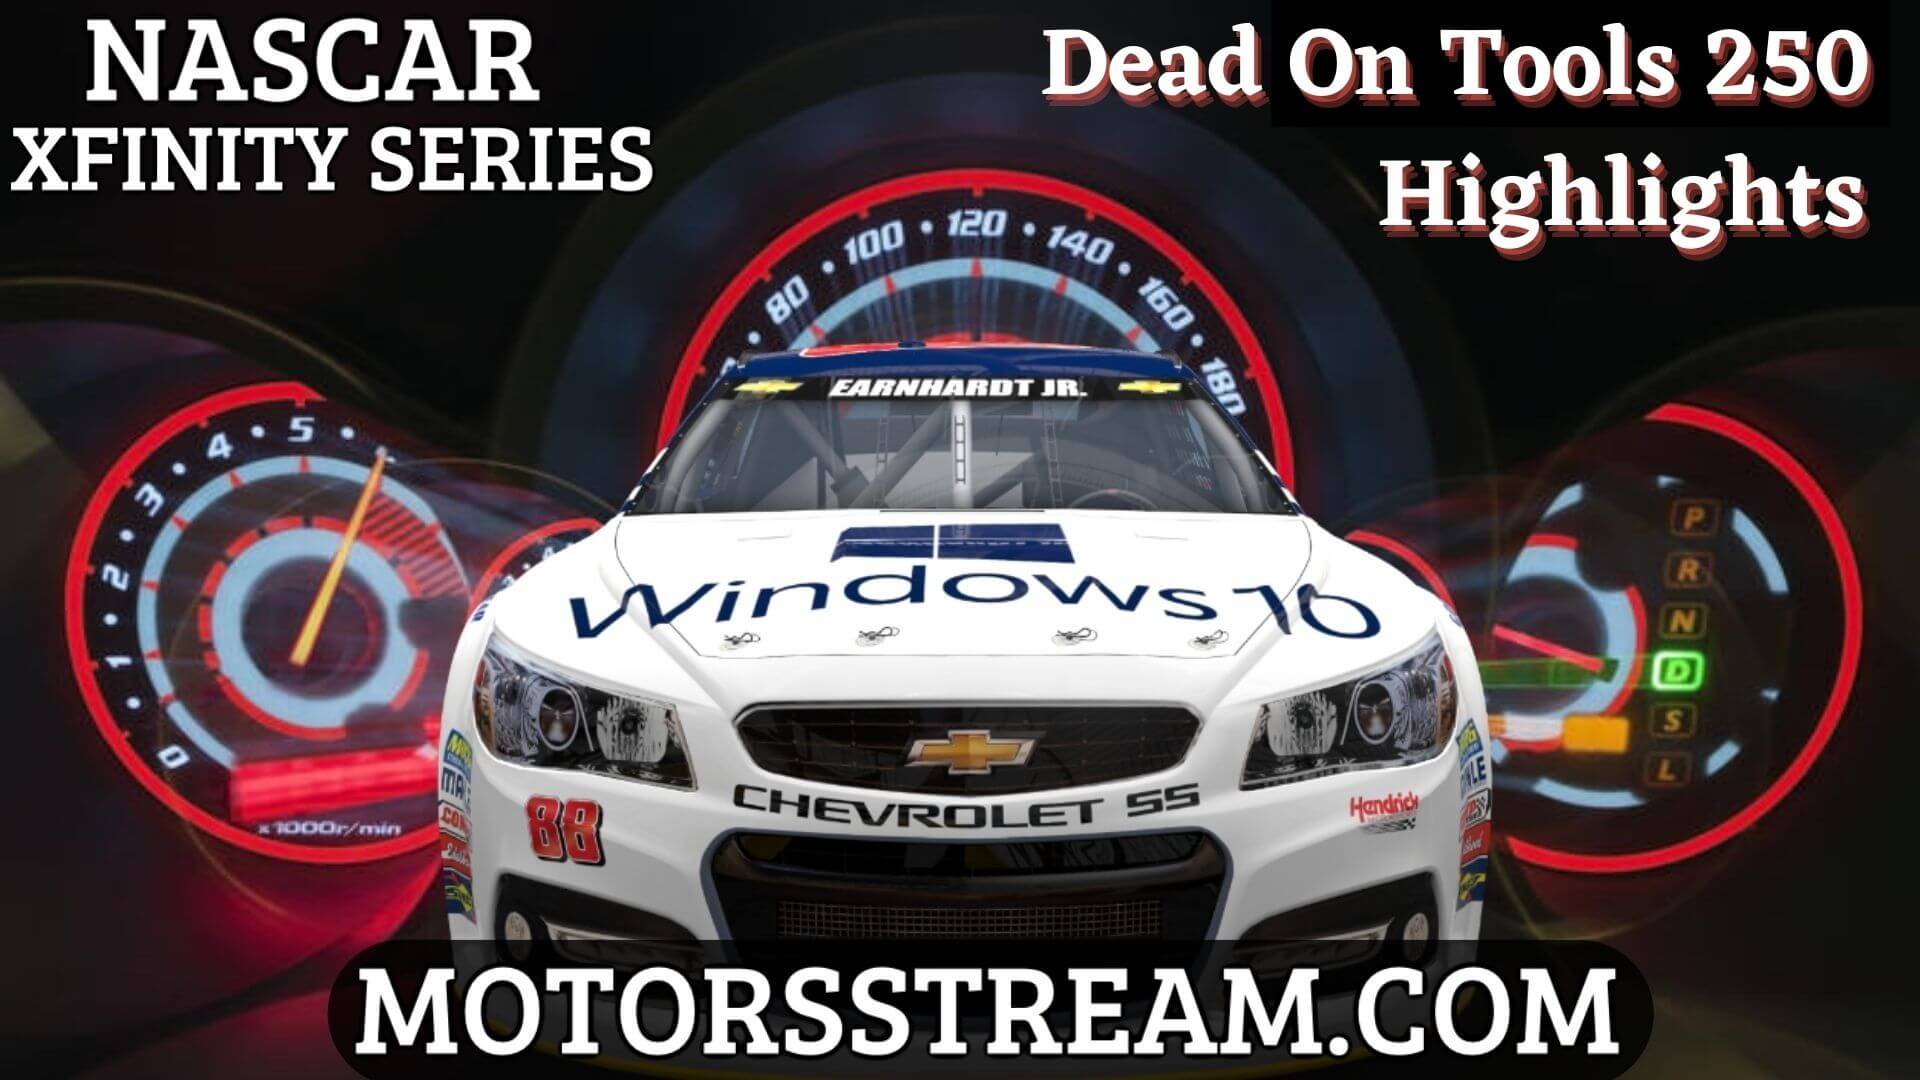 NASCAR Dead On Tools 250 Highlights 2021 Xfinity Series